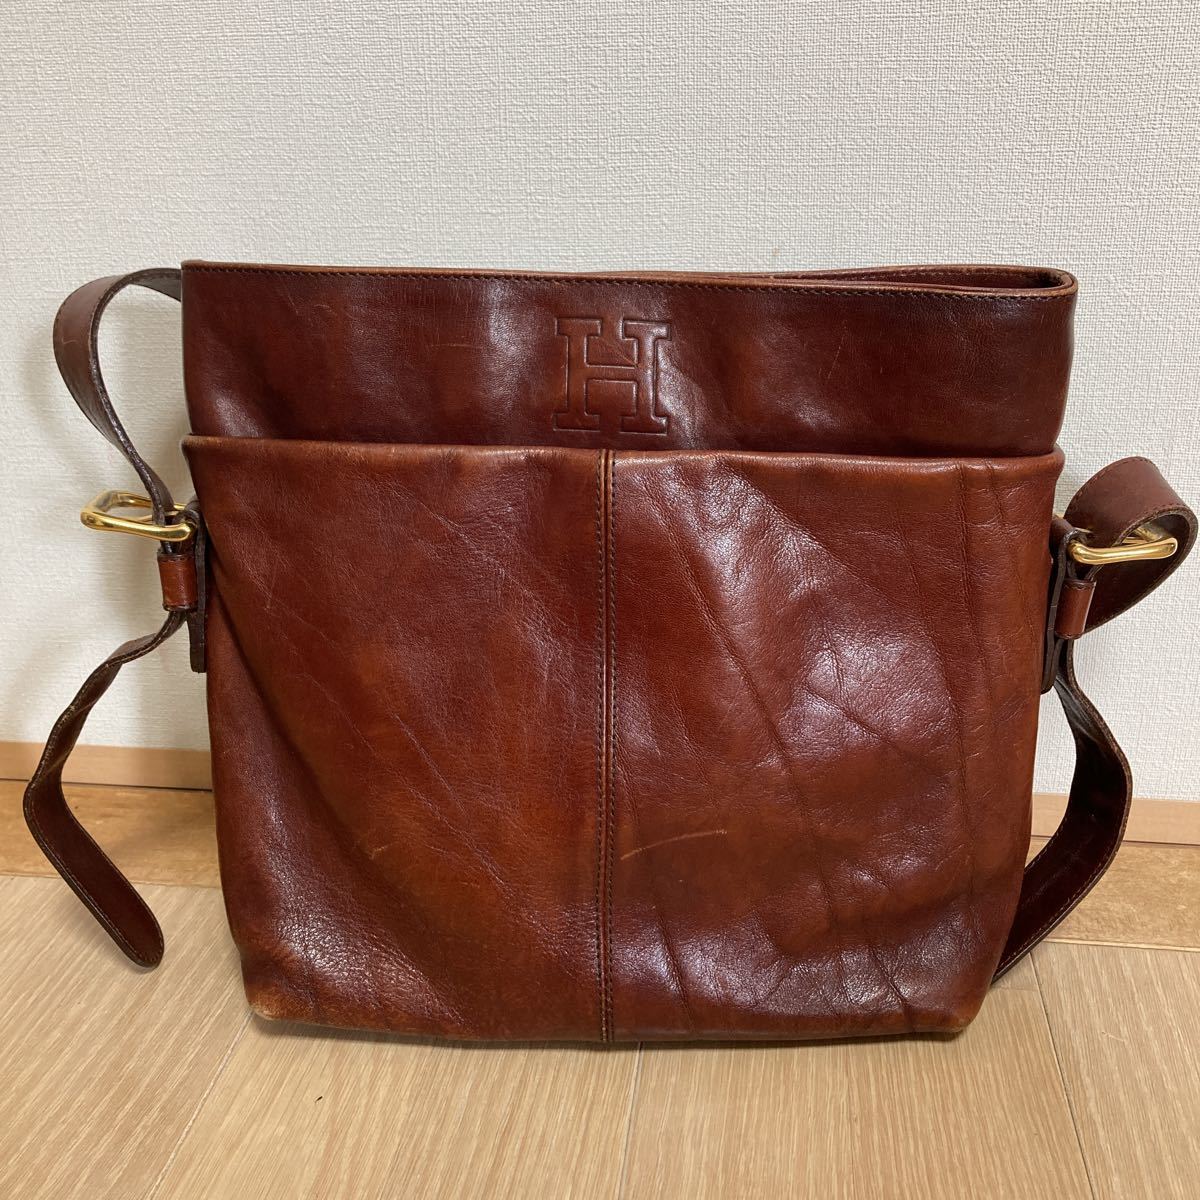 HIROFU Hirofu кожа сумка на плечо Brown Old сумка натуральная кожа Италия производства 